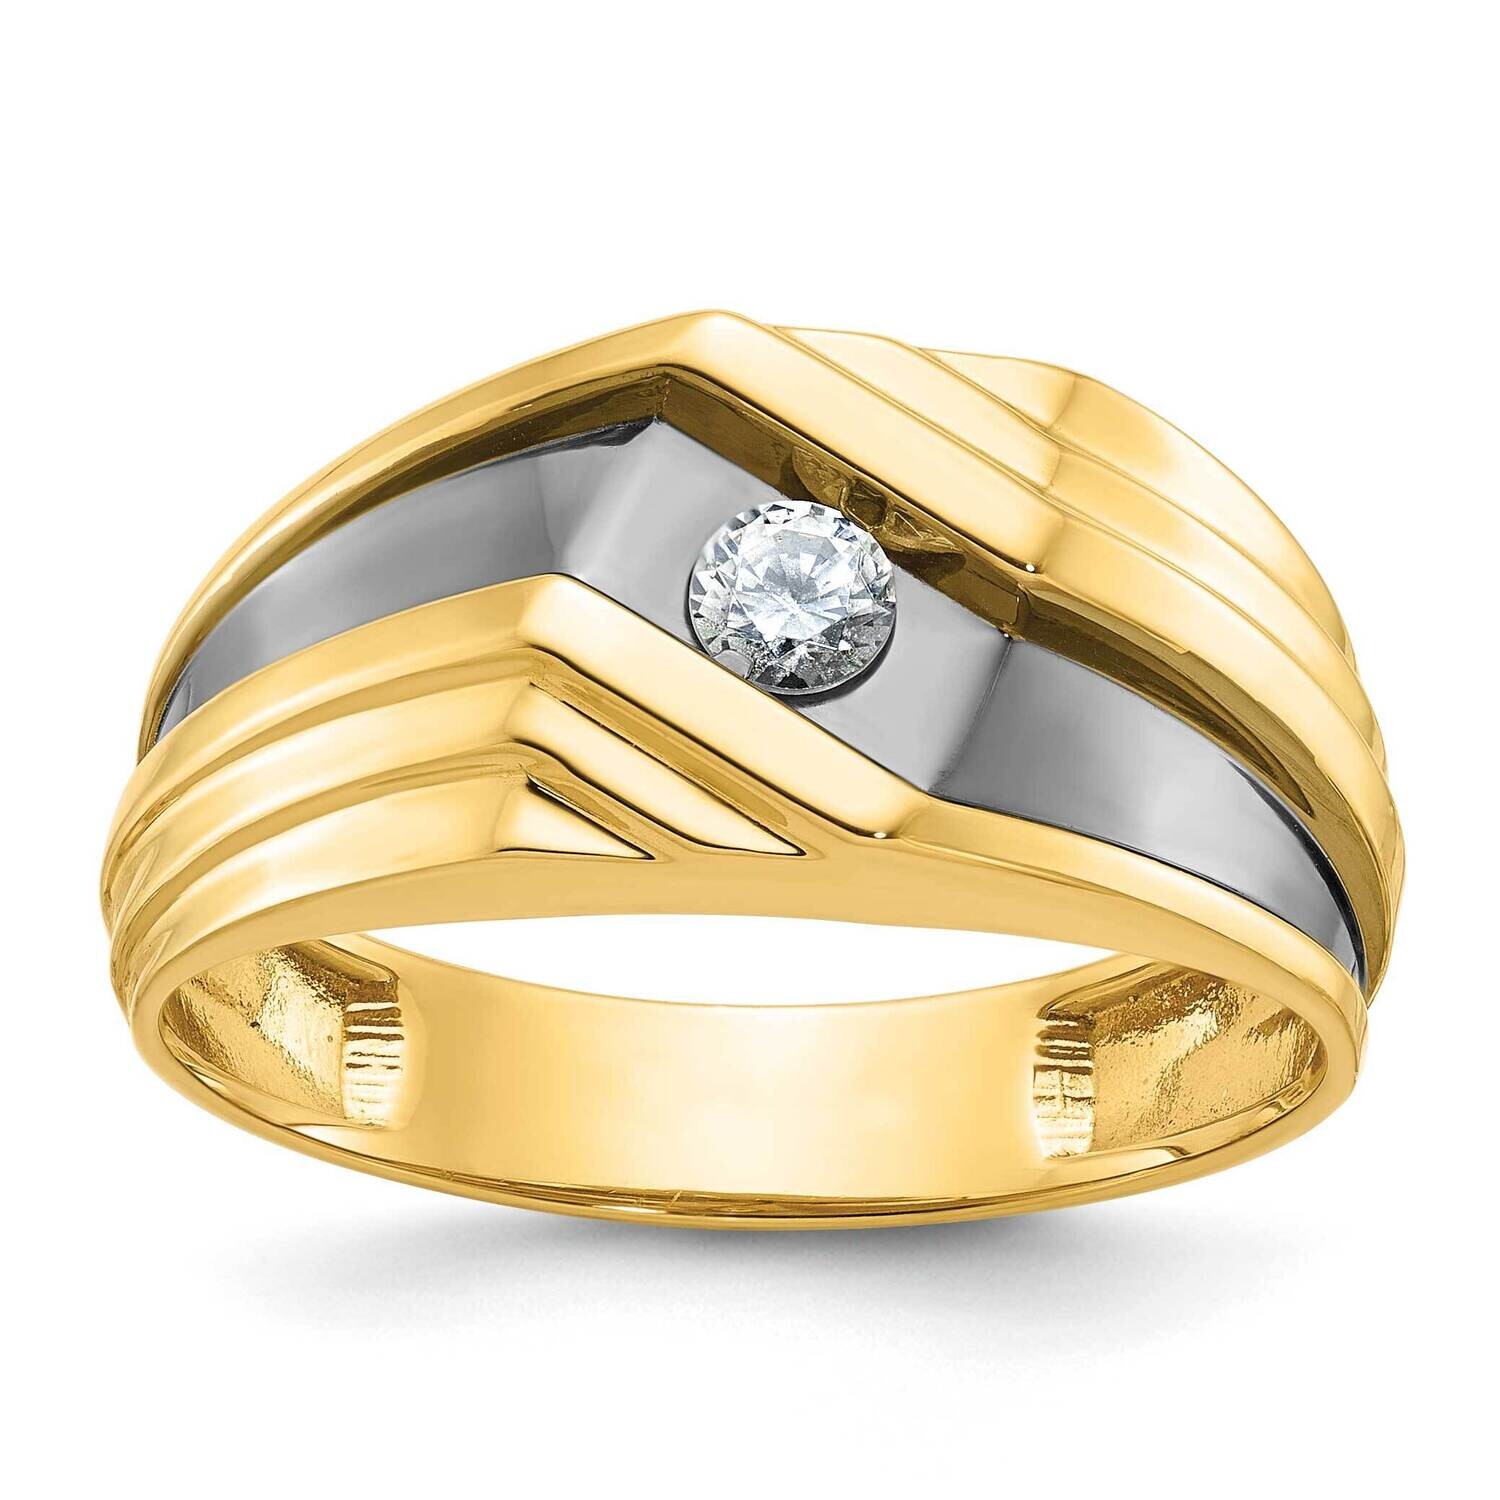 Ibgoodman Black Rhodium Men's Polished Grooved 1/6 Carat Aa Quality Diamond Ring 14k Gold B56893-4YAA